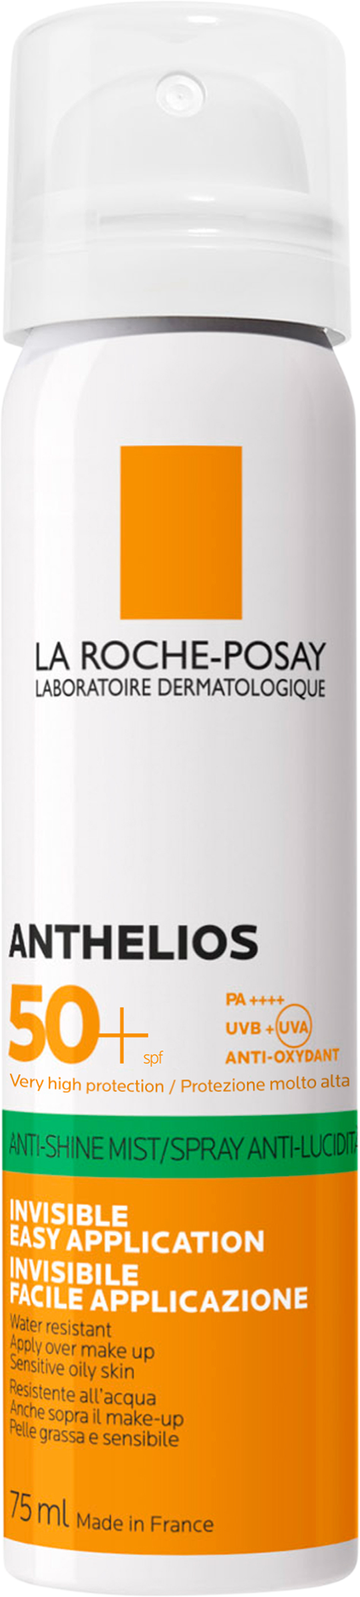 La Roche-Posay Anthelios Anti shine mist SPF50+